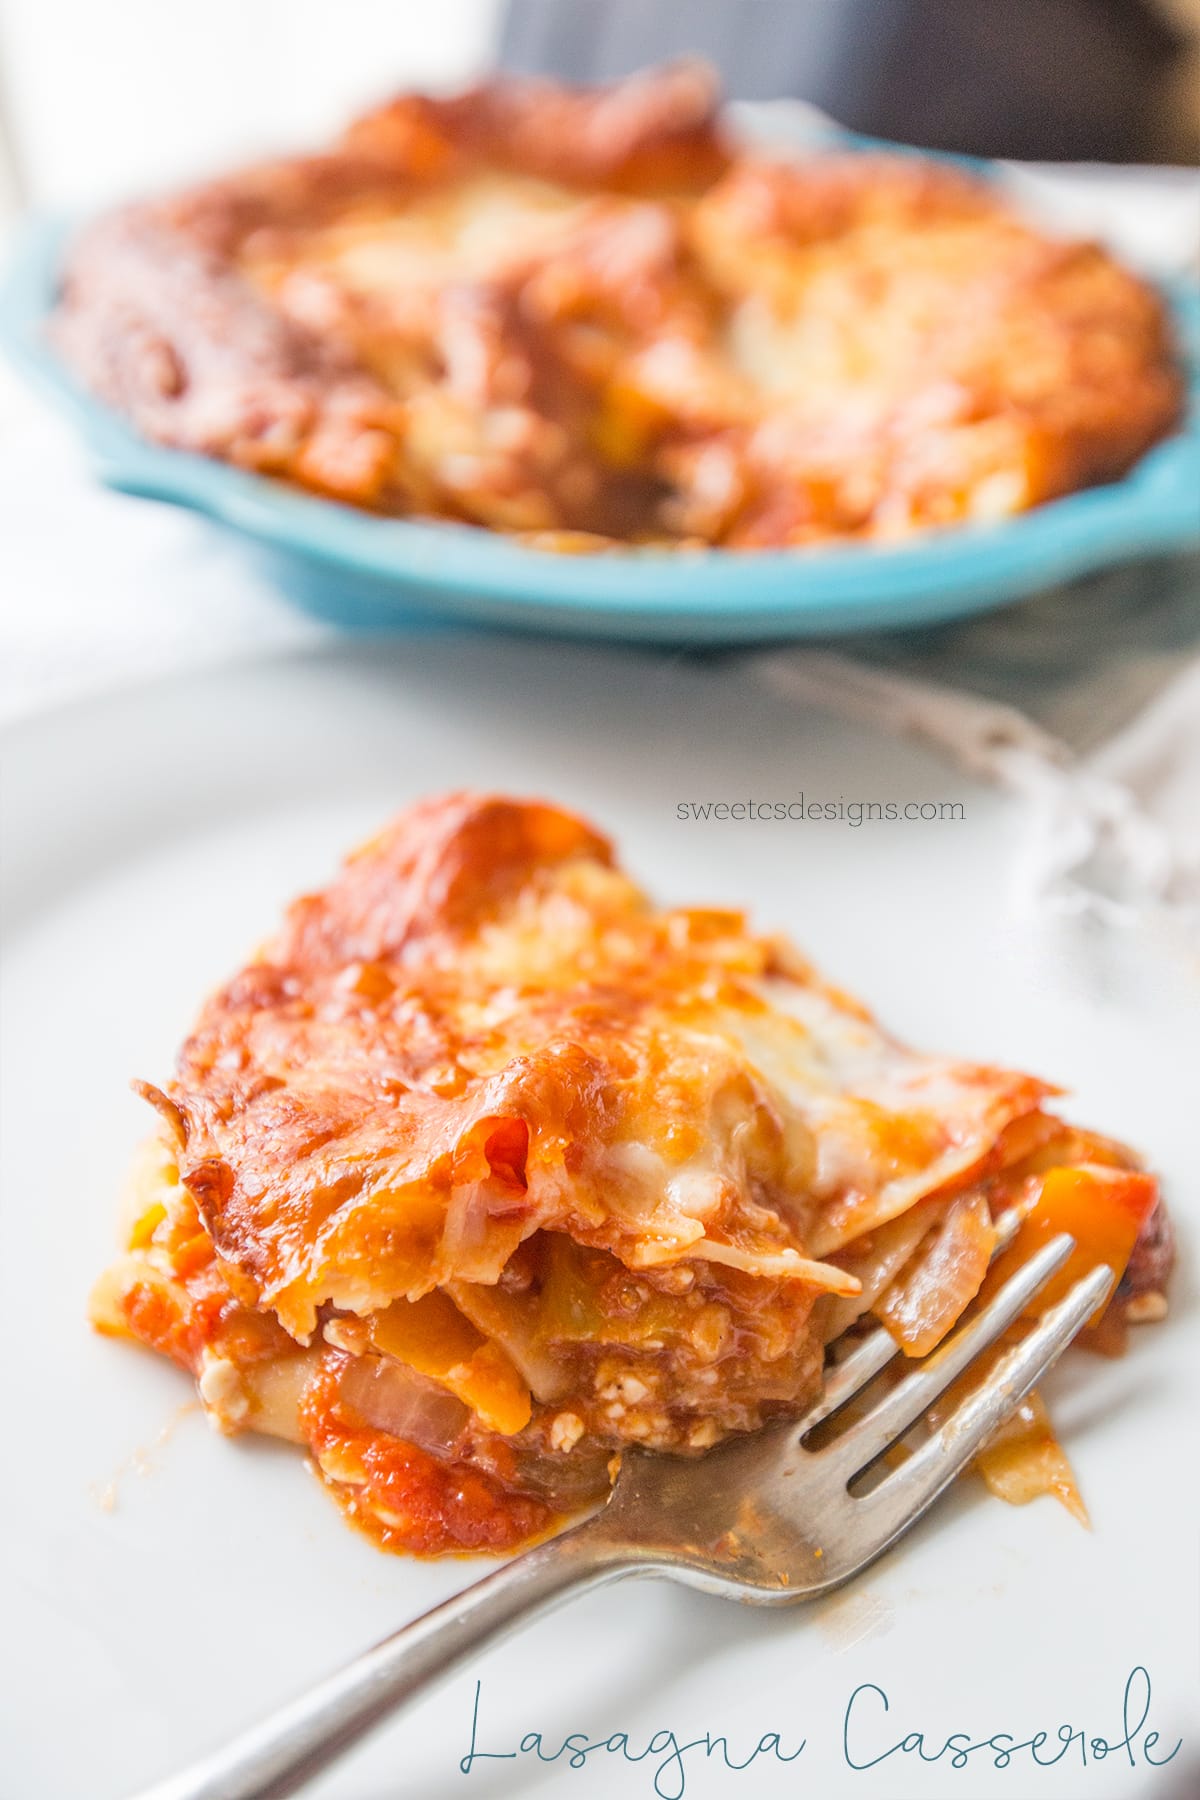 I love this lasagna casserole- when you want lasagna fast!